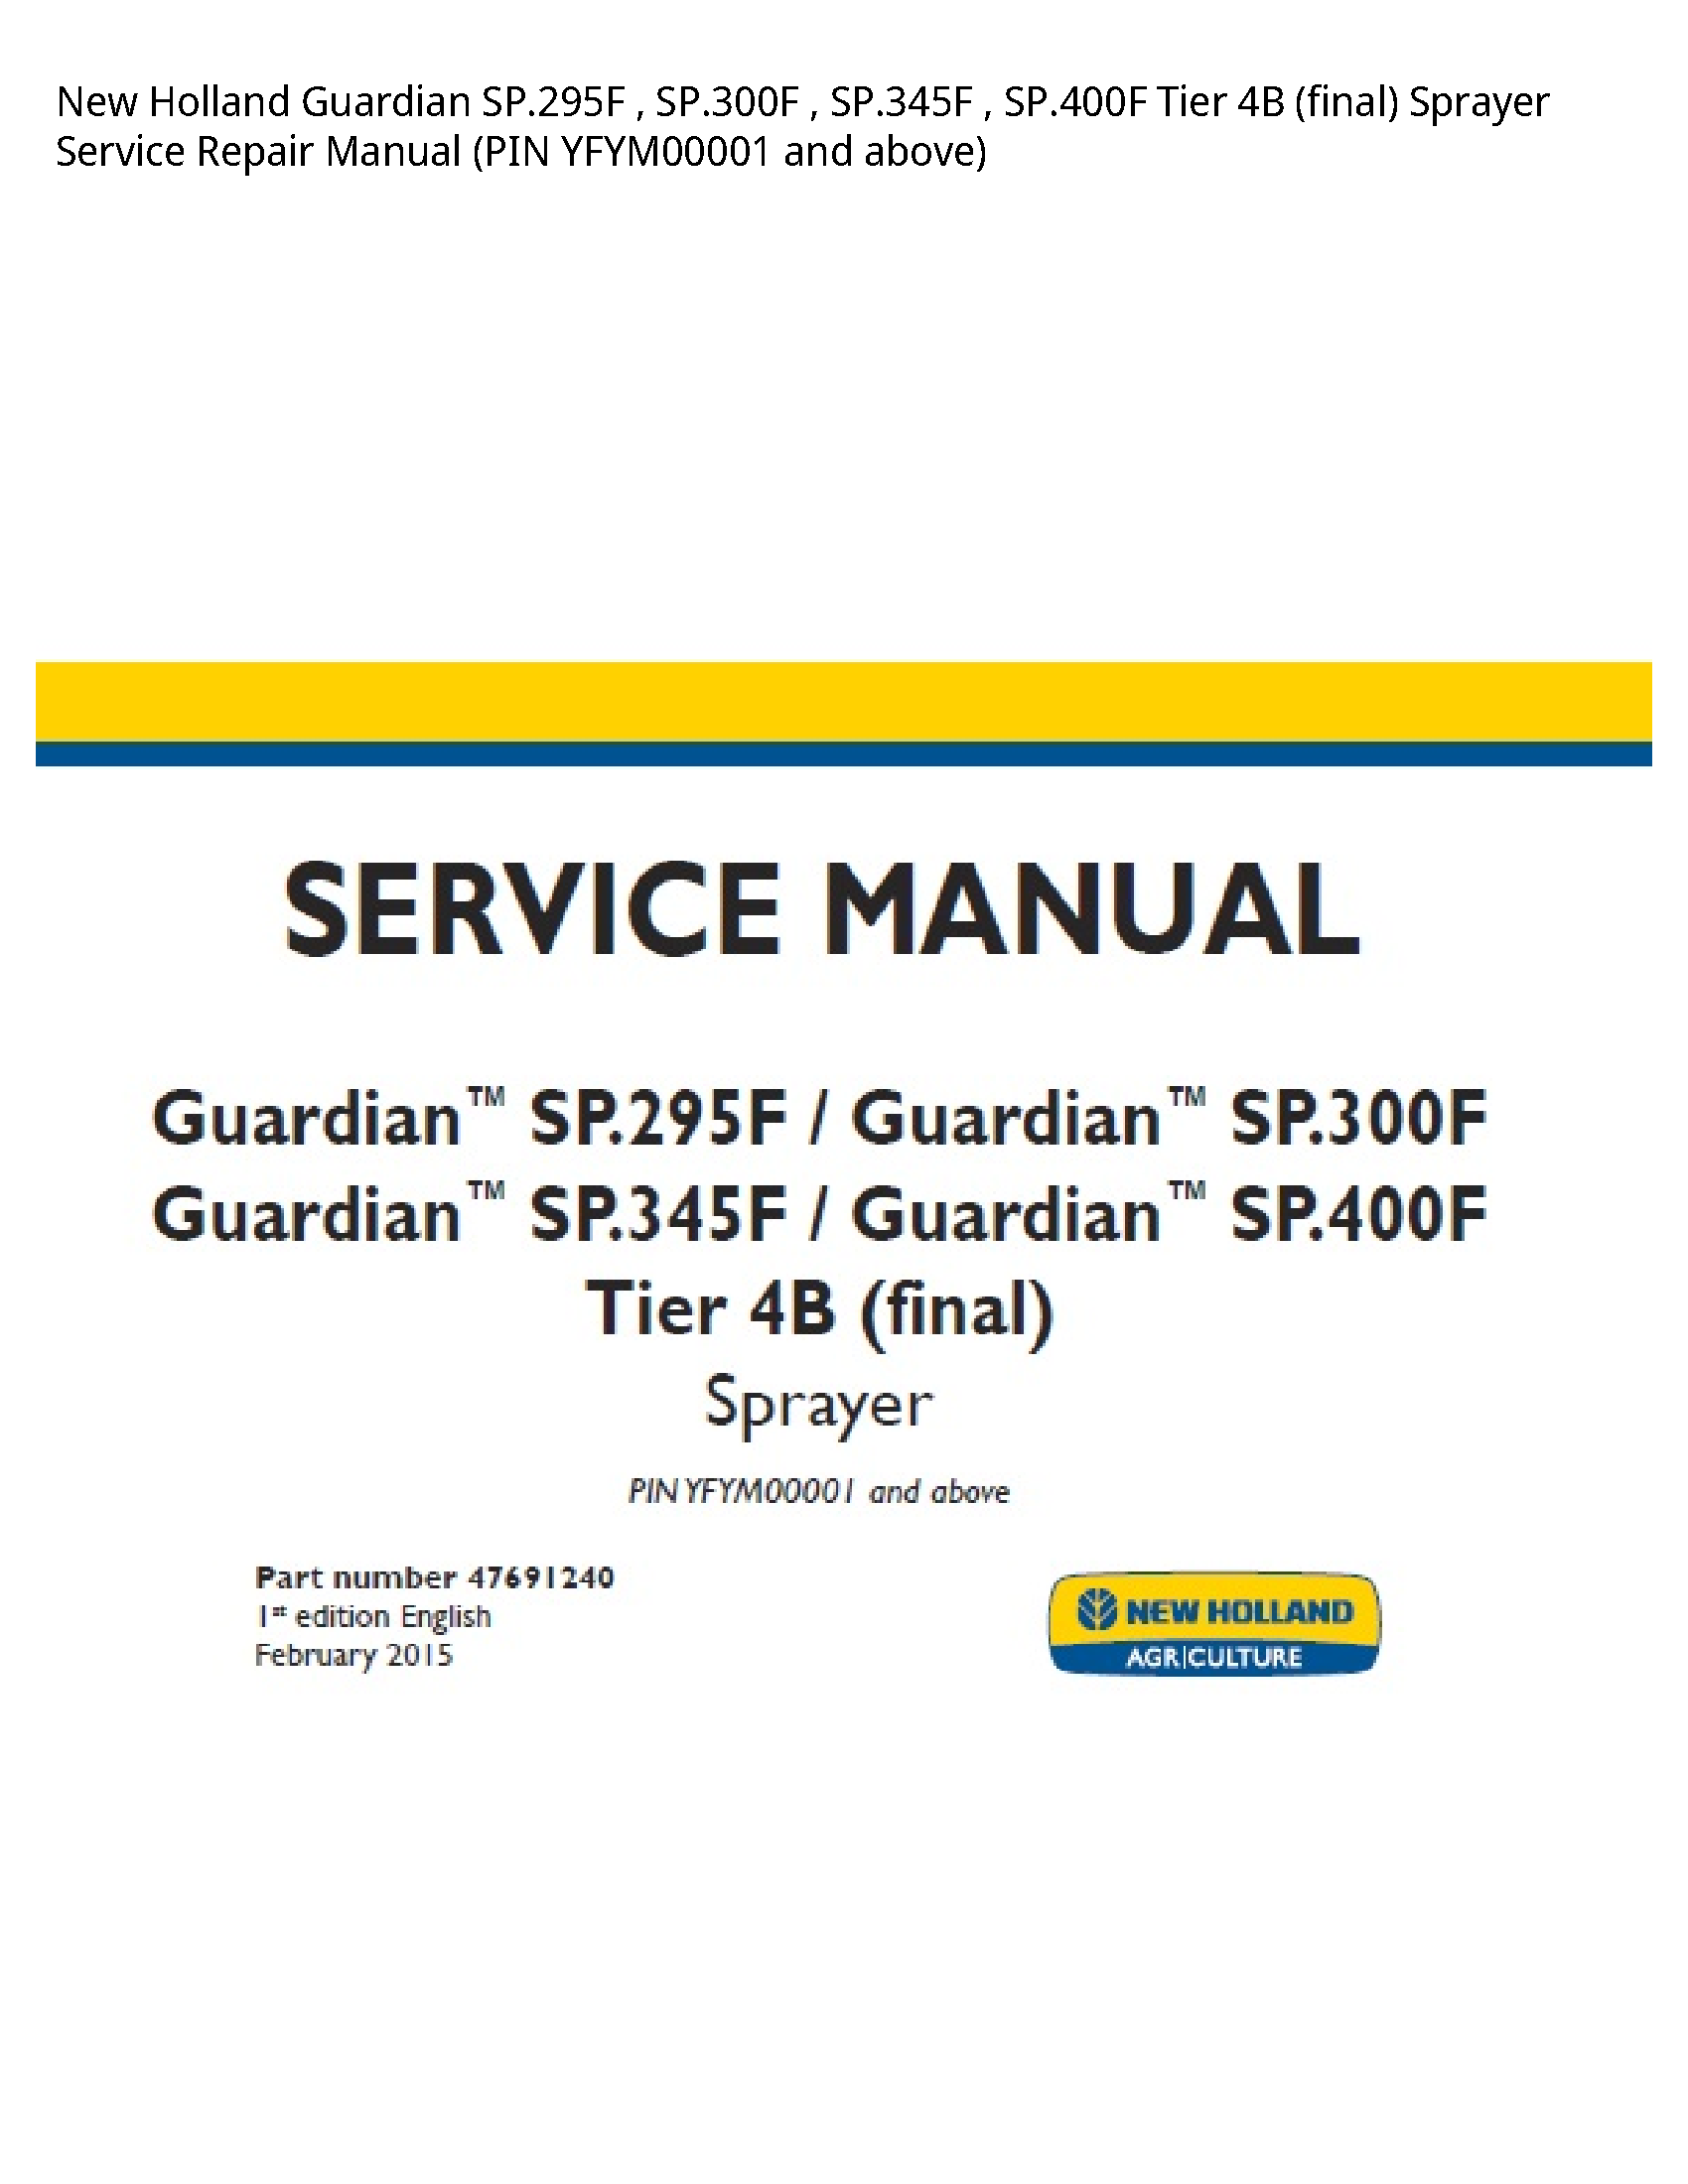 New Holland SP.295F Guardian Tier (final) Sprayer manual